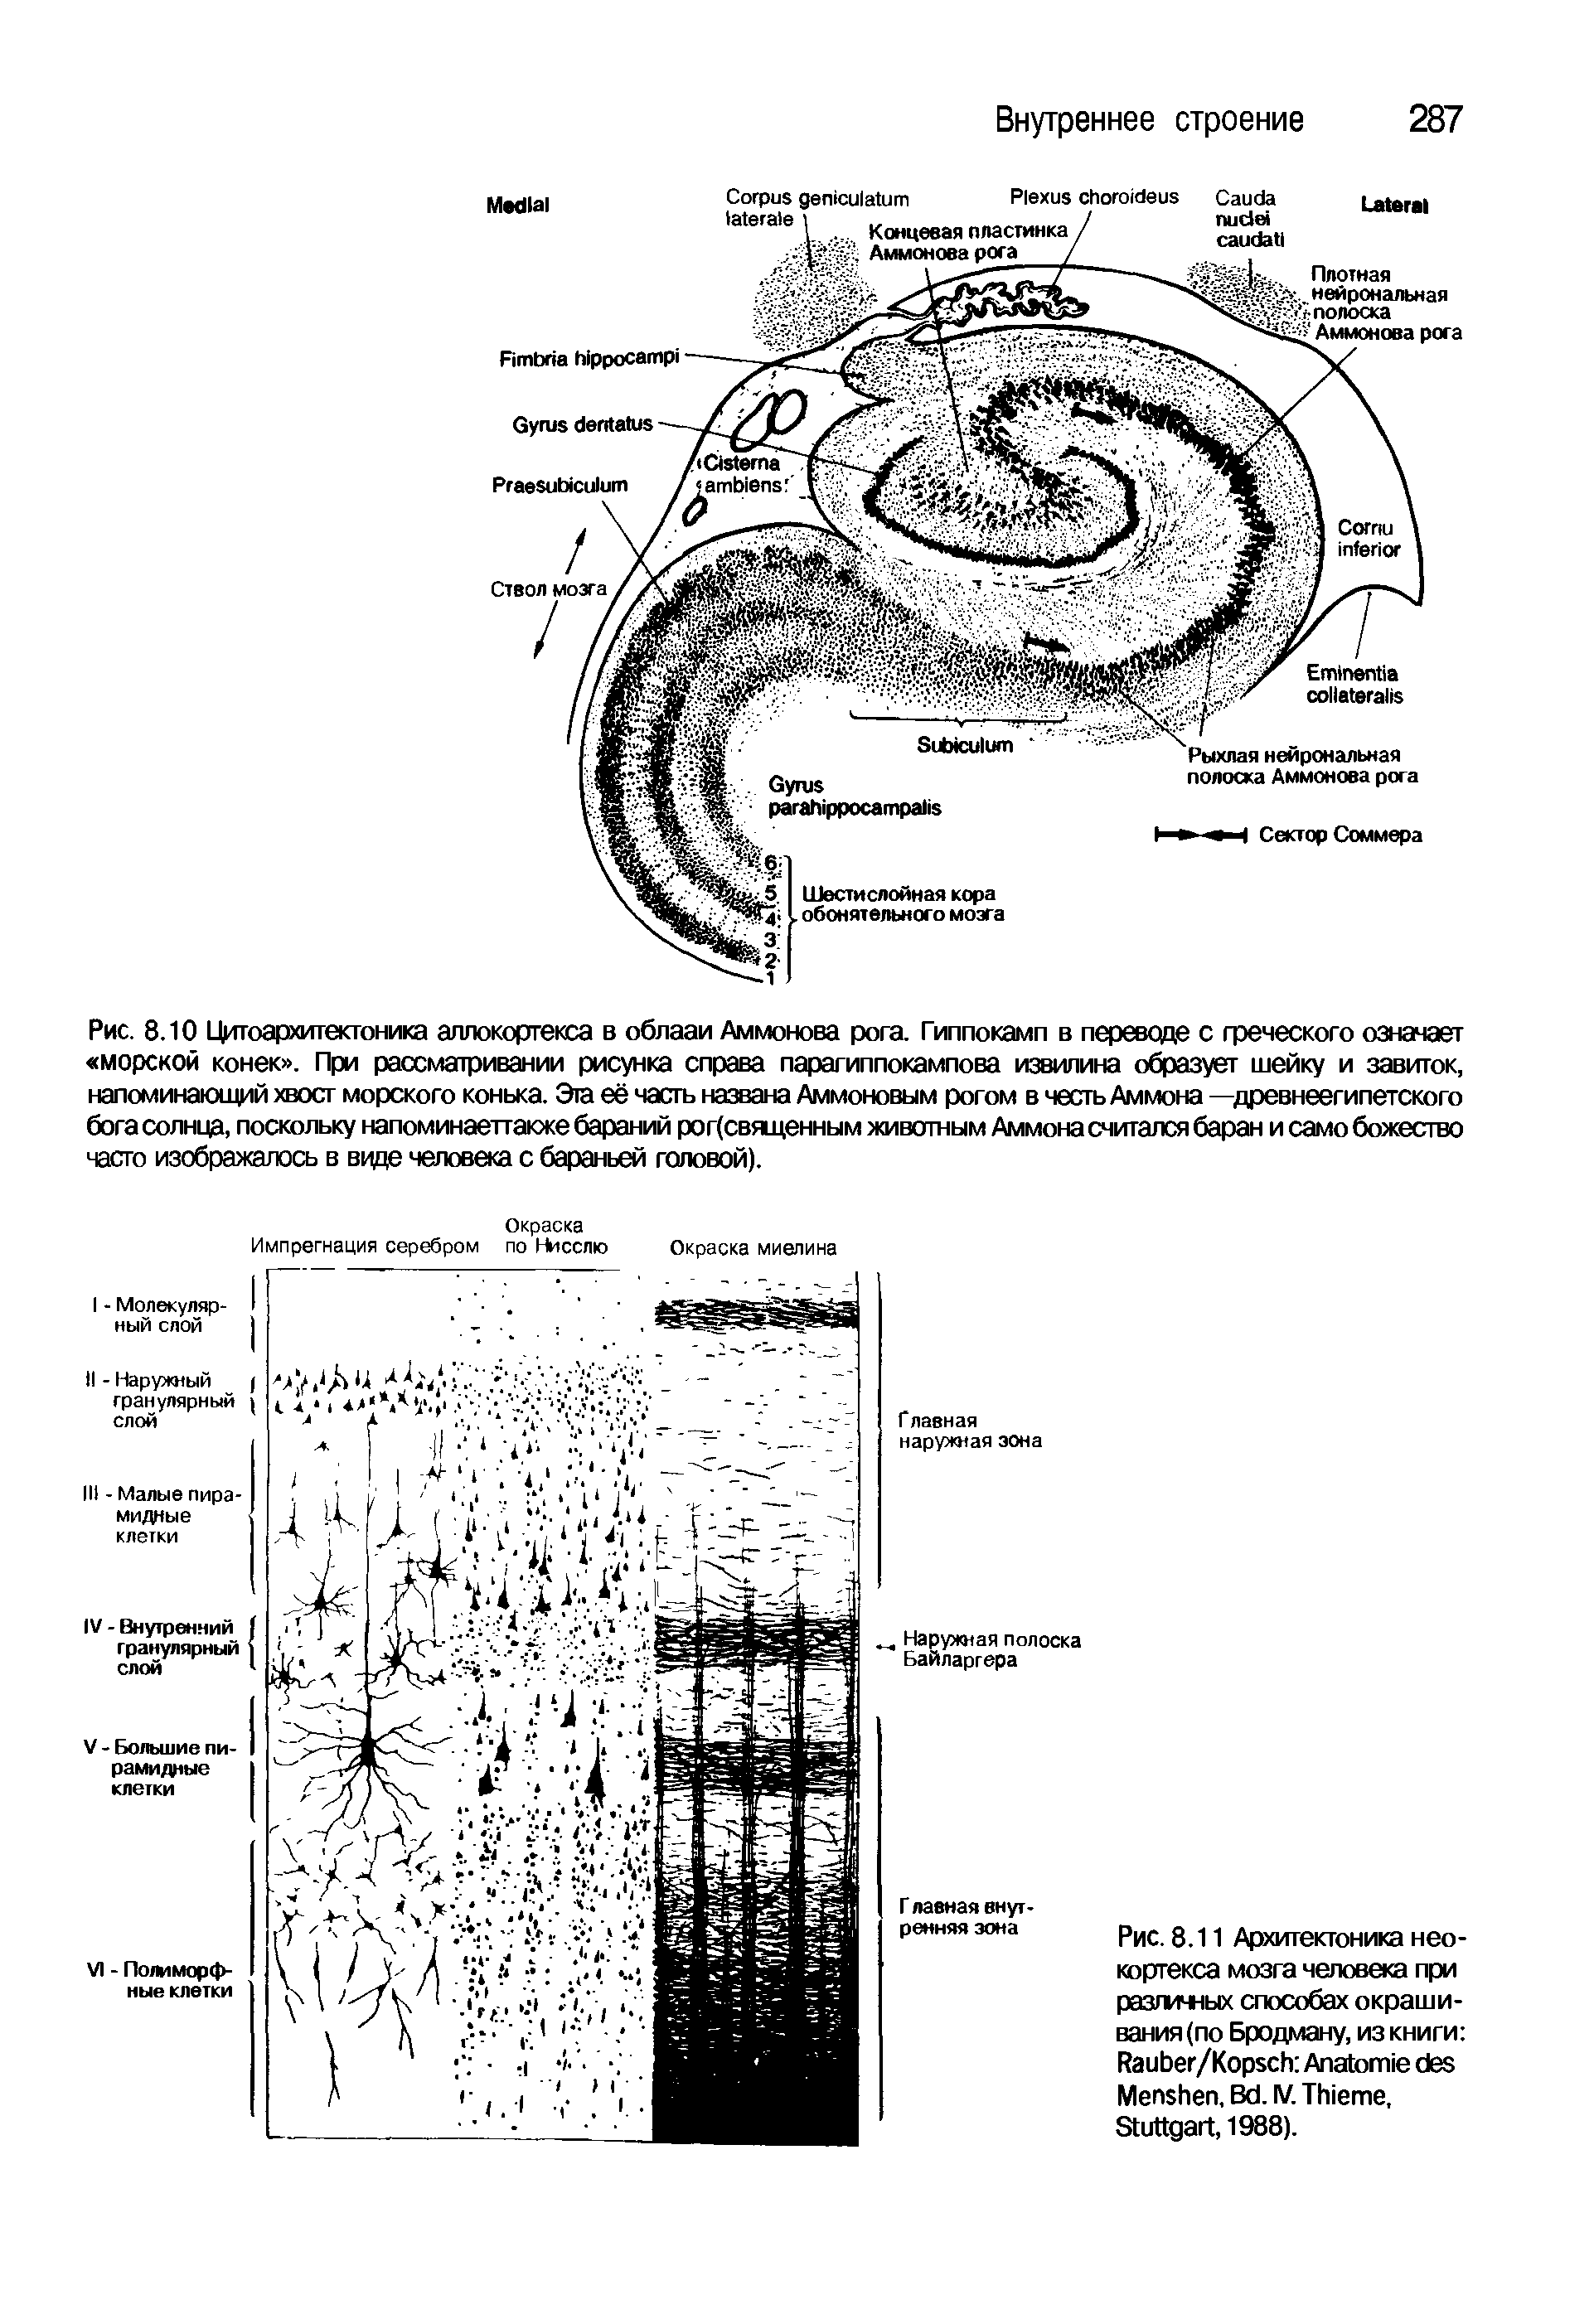 Рис. 8.11 Архитектоника нео-коргекса мозга человека при различных способах окрашивания (по Бродману, из книги R /K A M , B . IV. T , S , 1988).